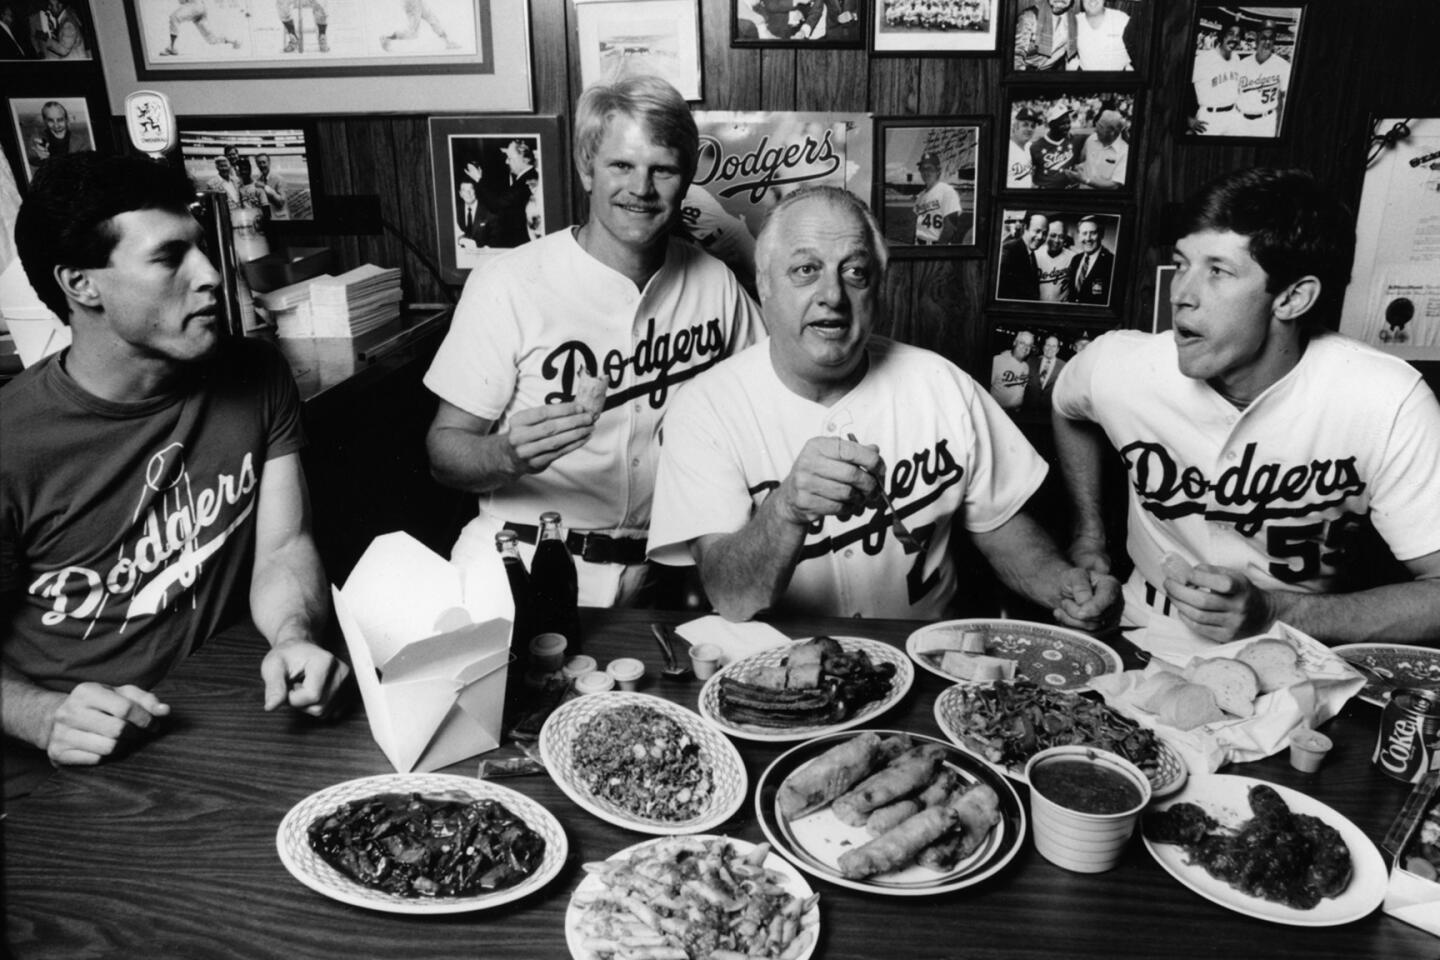 1988 Dodgers player profile: Steve Sax, the table setter - True